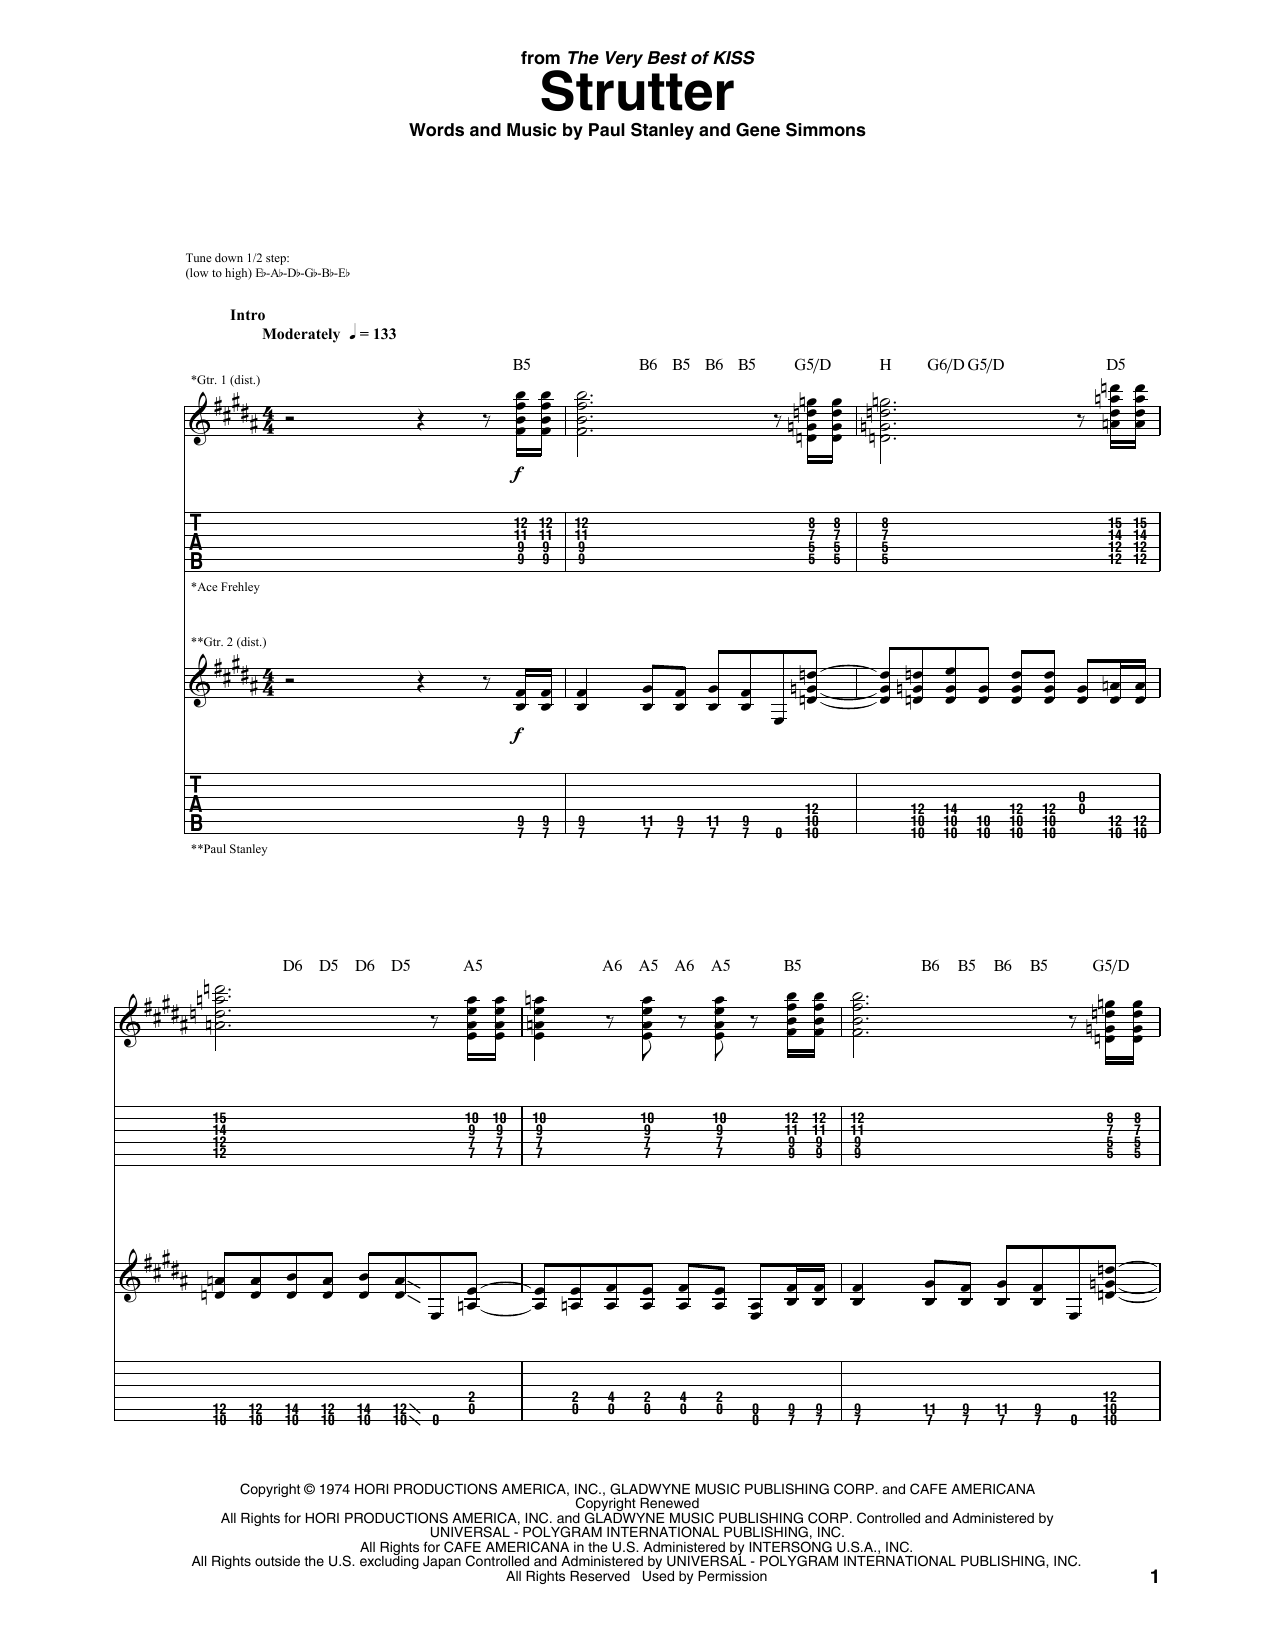 KISS Strutter Sheet Music Notes & Chords for Lyrics & Chords - Download or Print PDF